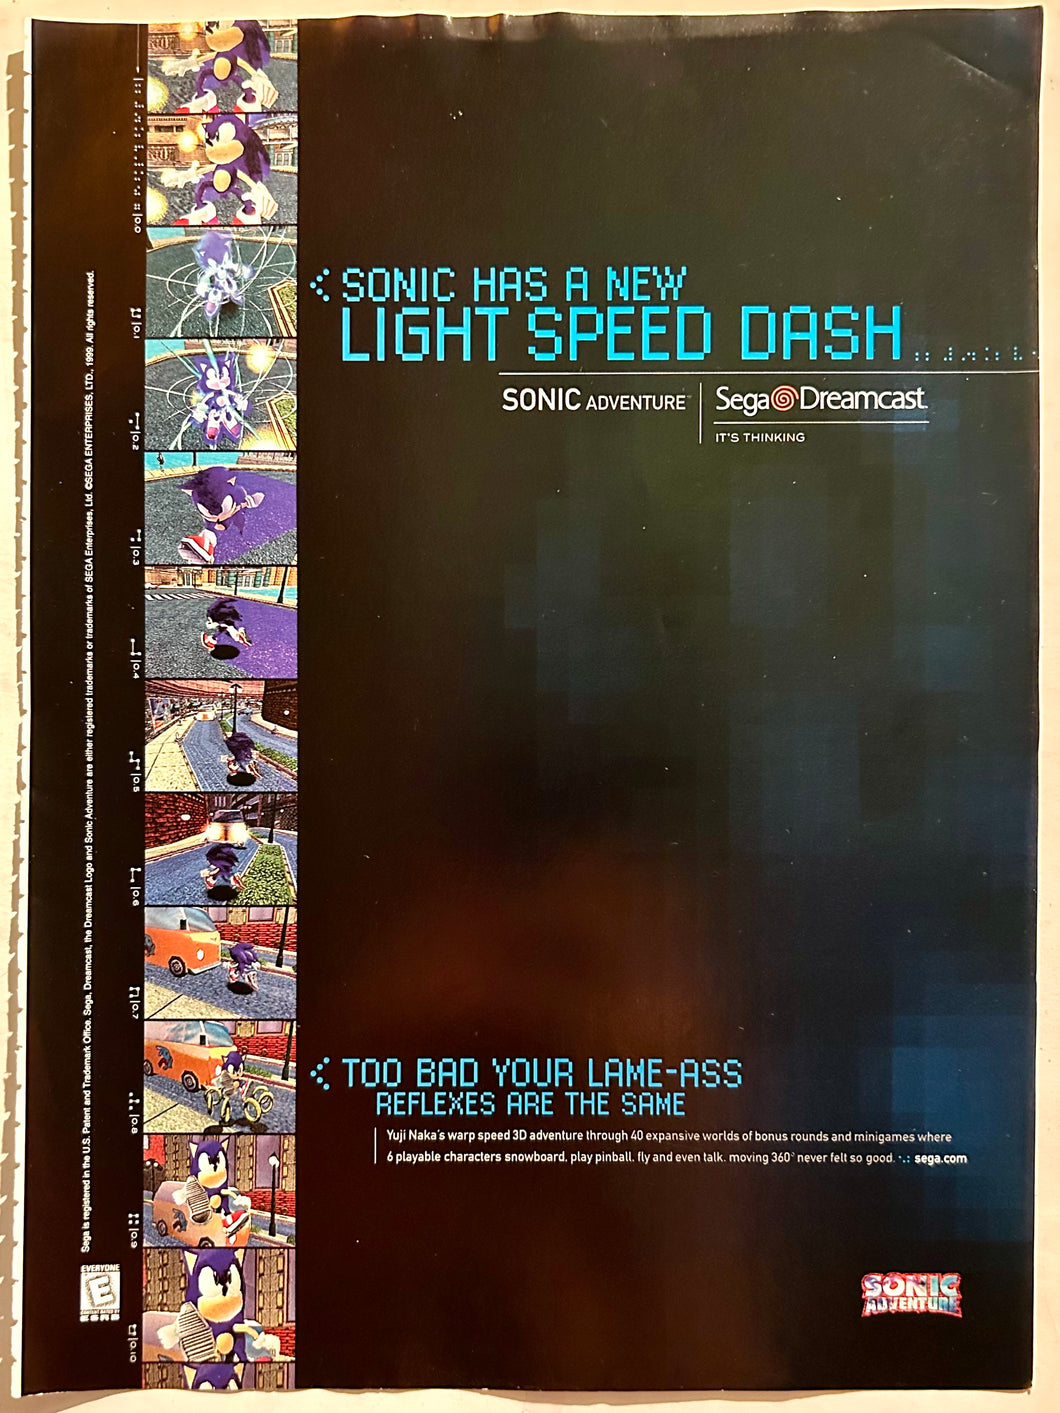 Sonic Adventure - Dreamcast - Original Vintage Advertisement - Print Ads - Laminated A4 Poster